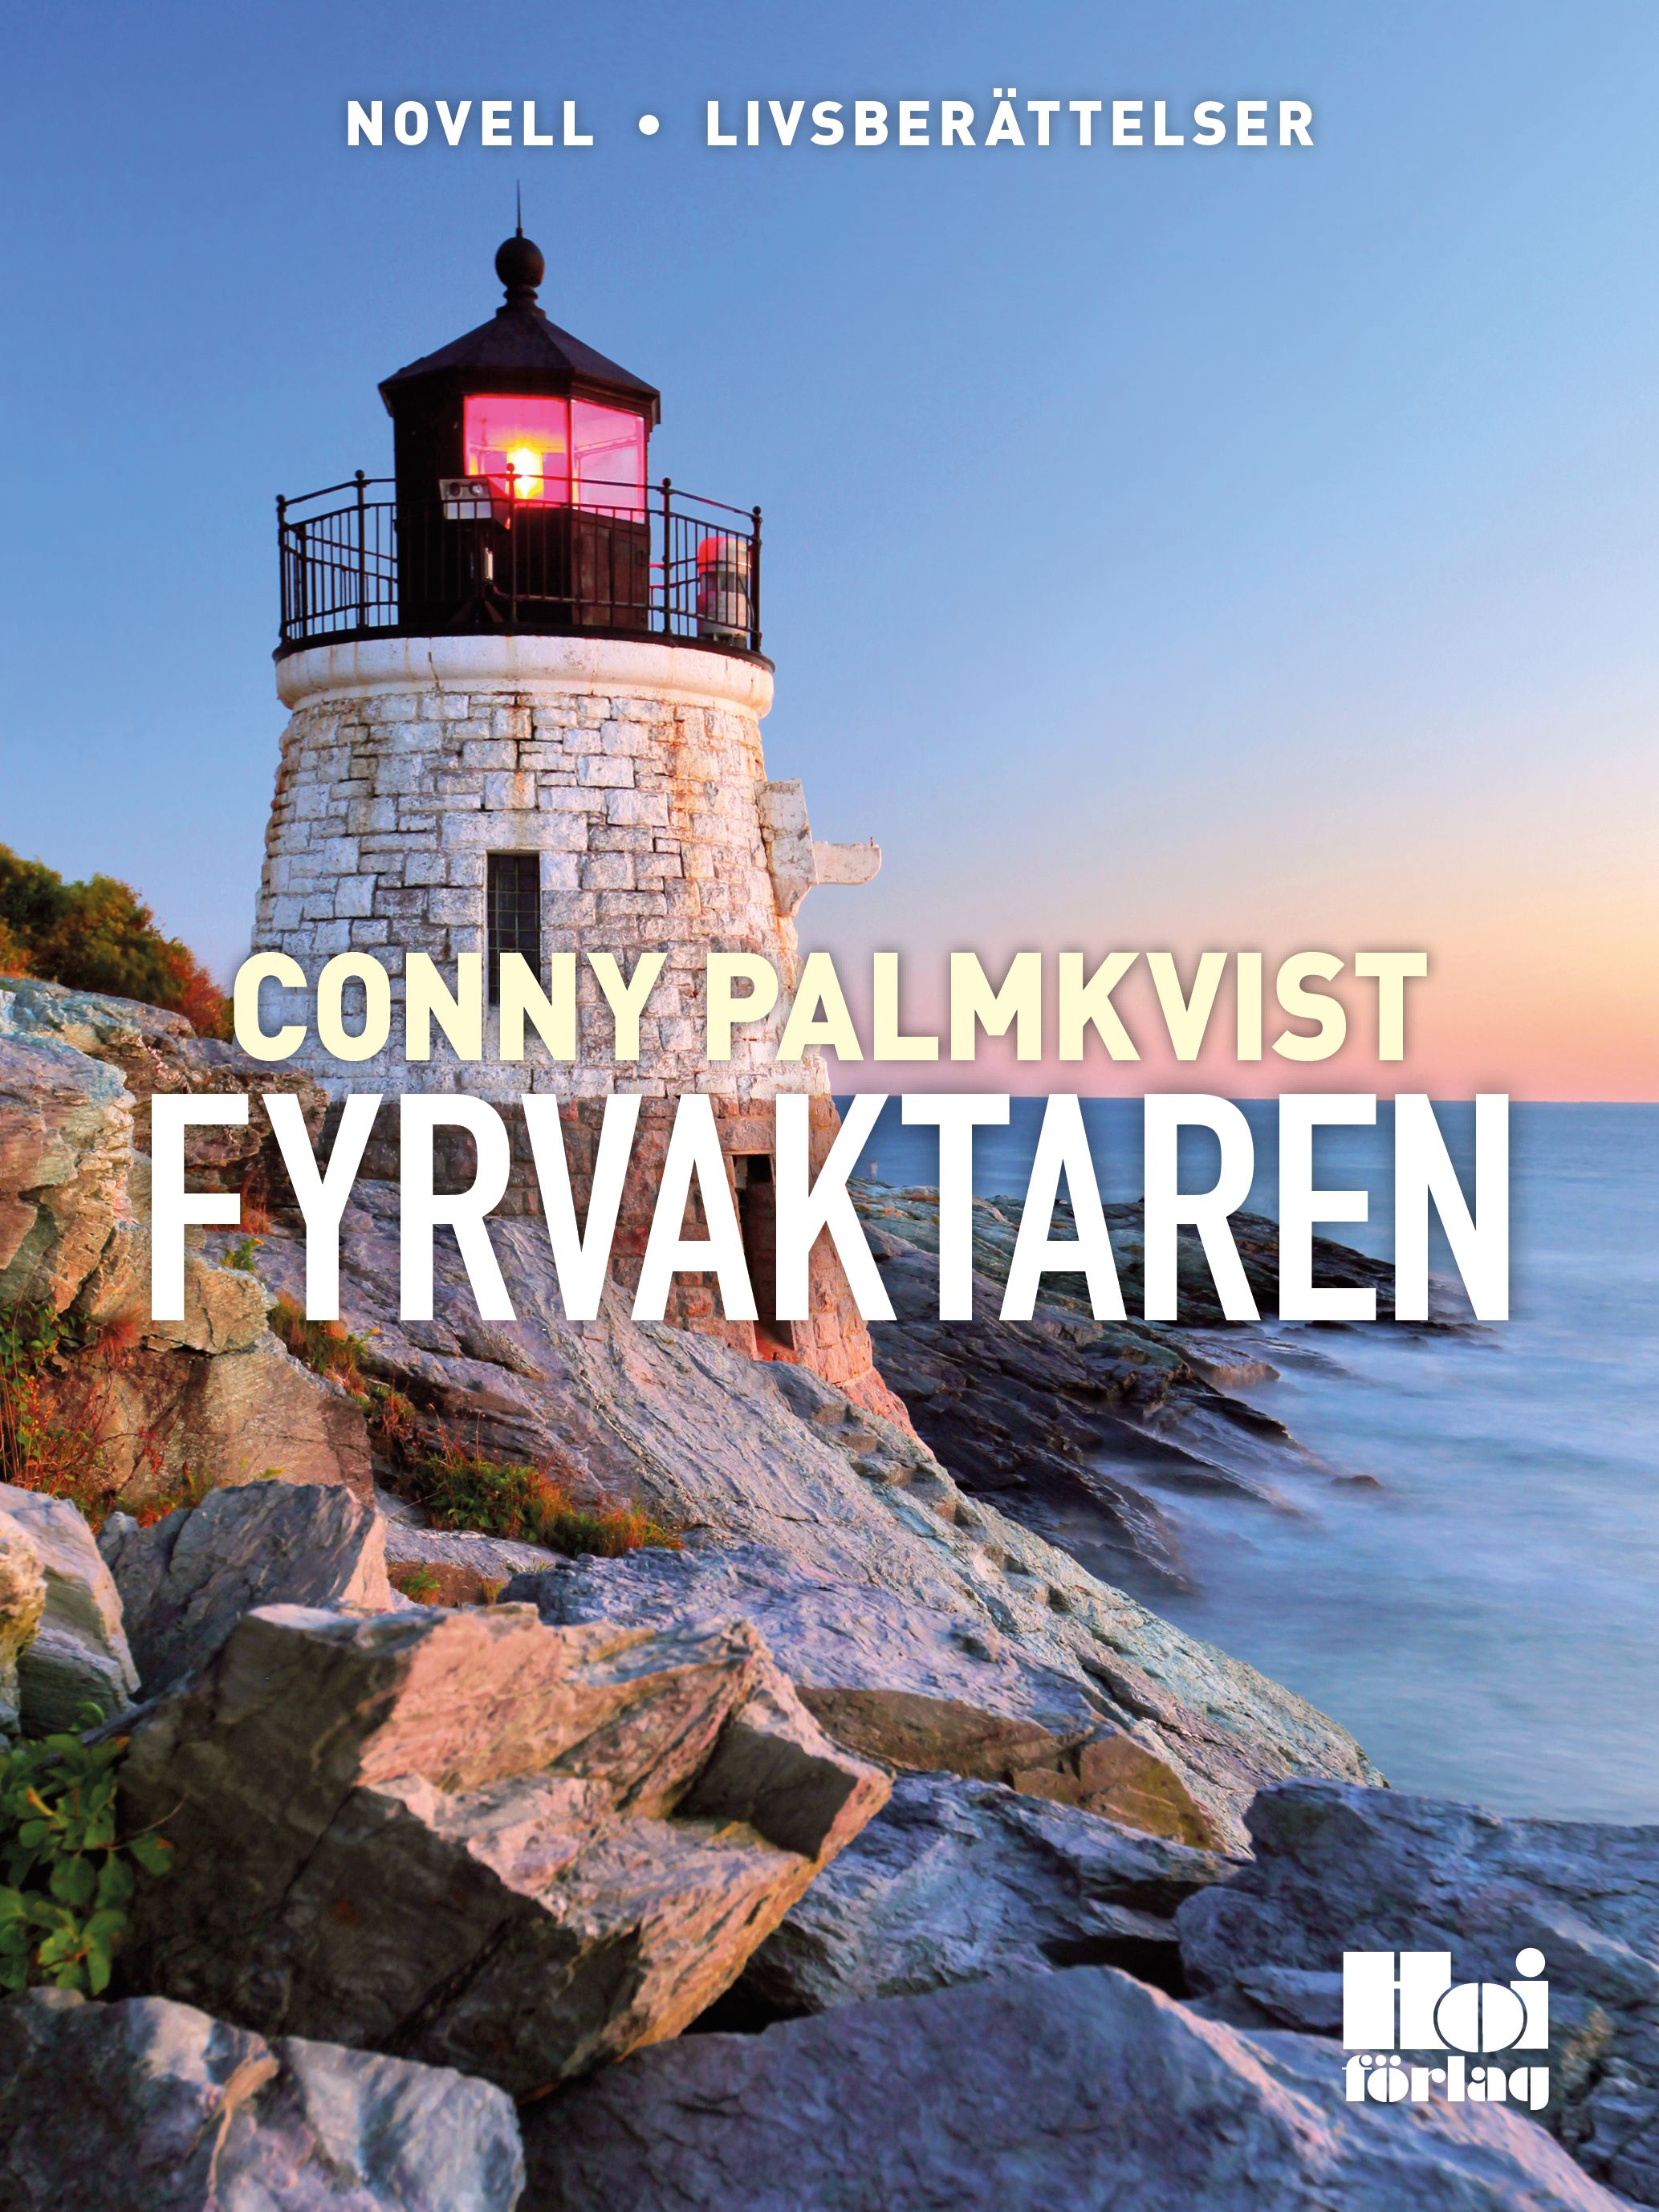 Fyrvaktaren, eBook by Conny Palmkvist